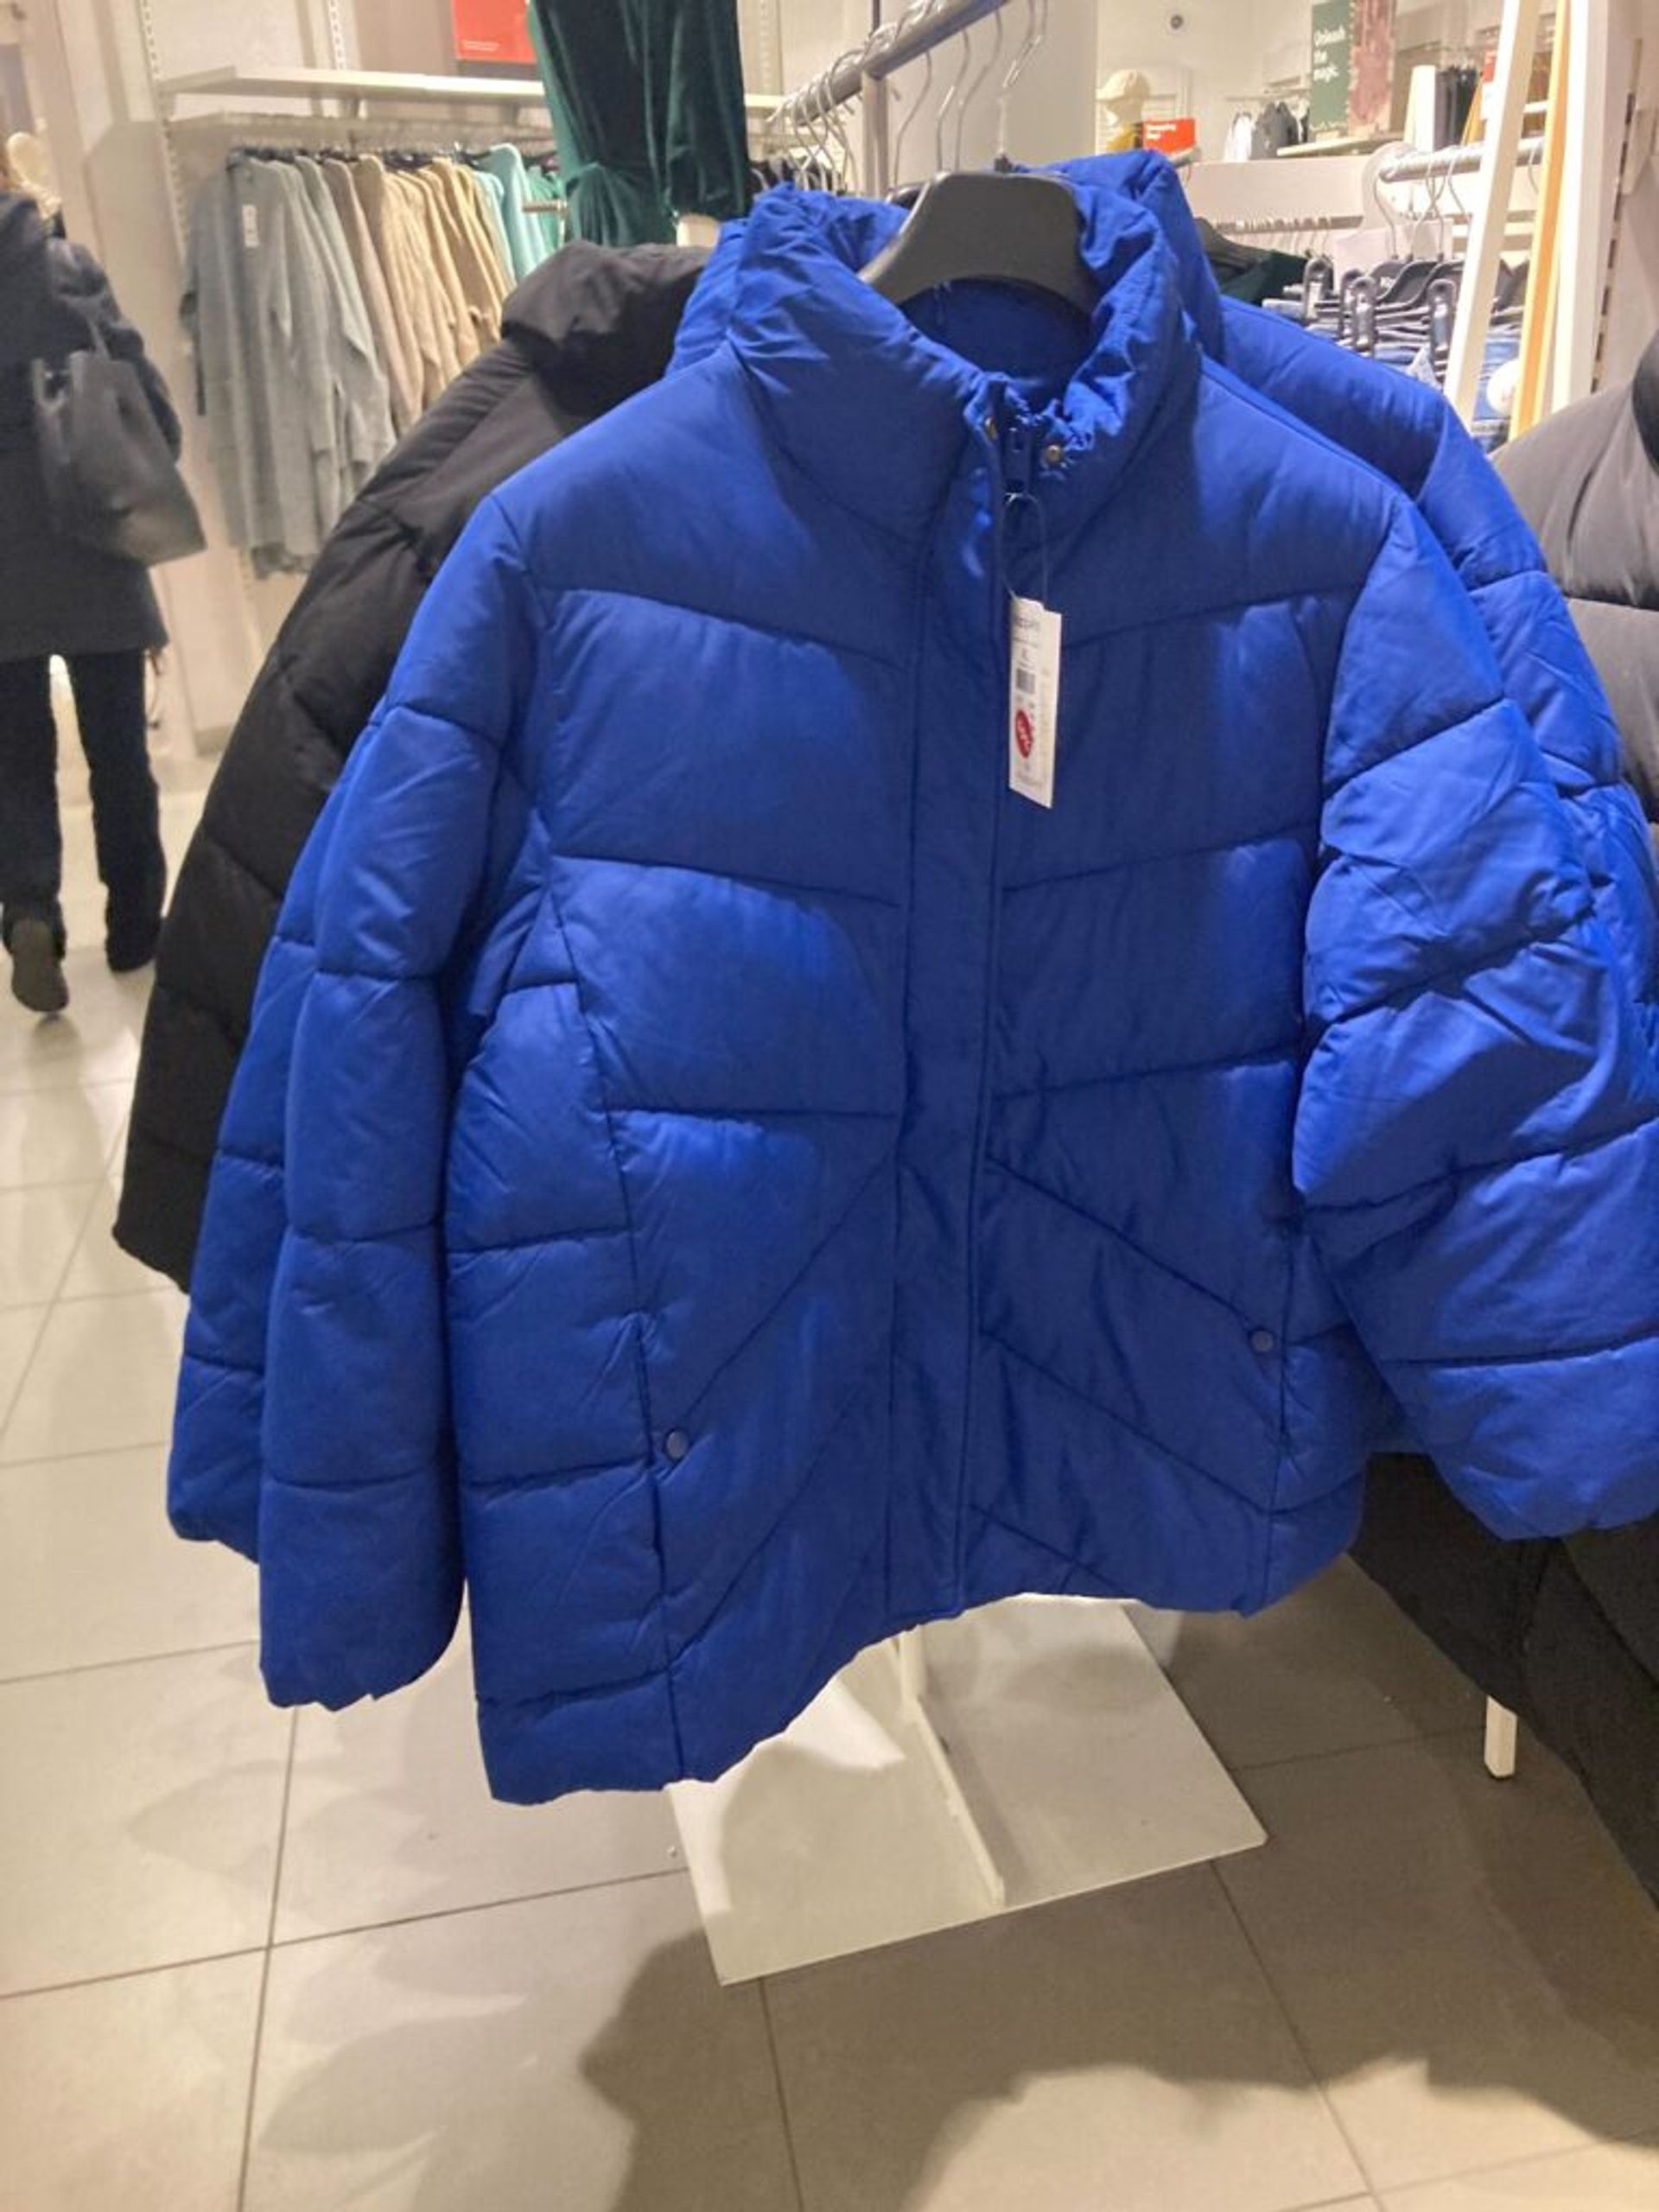 A blue winter jacket